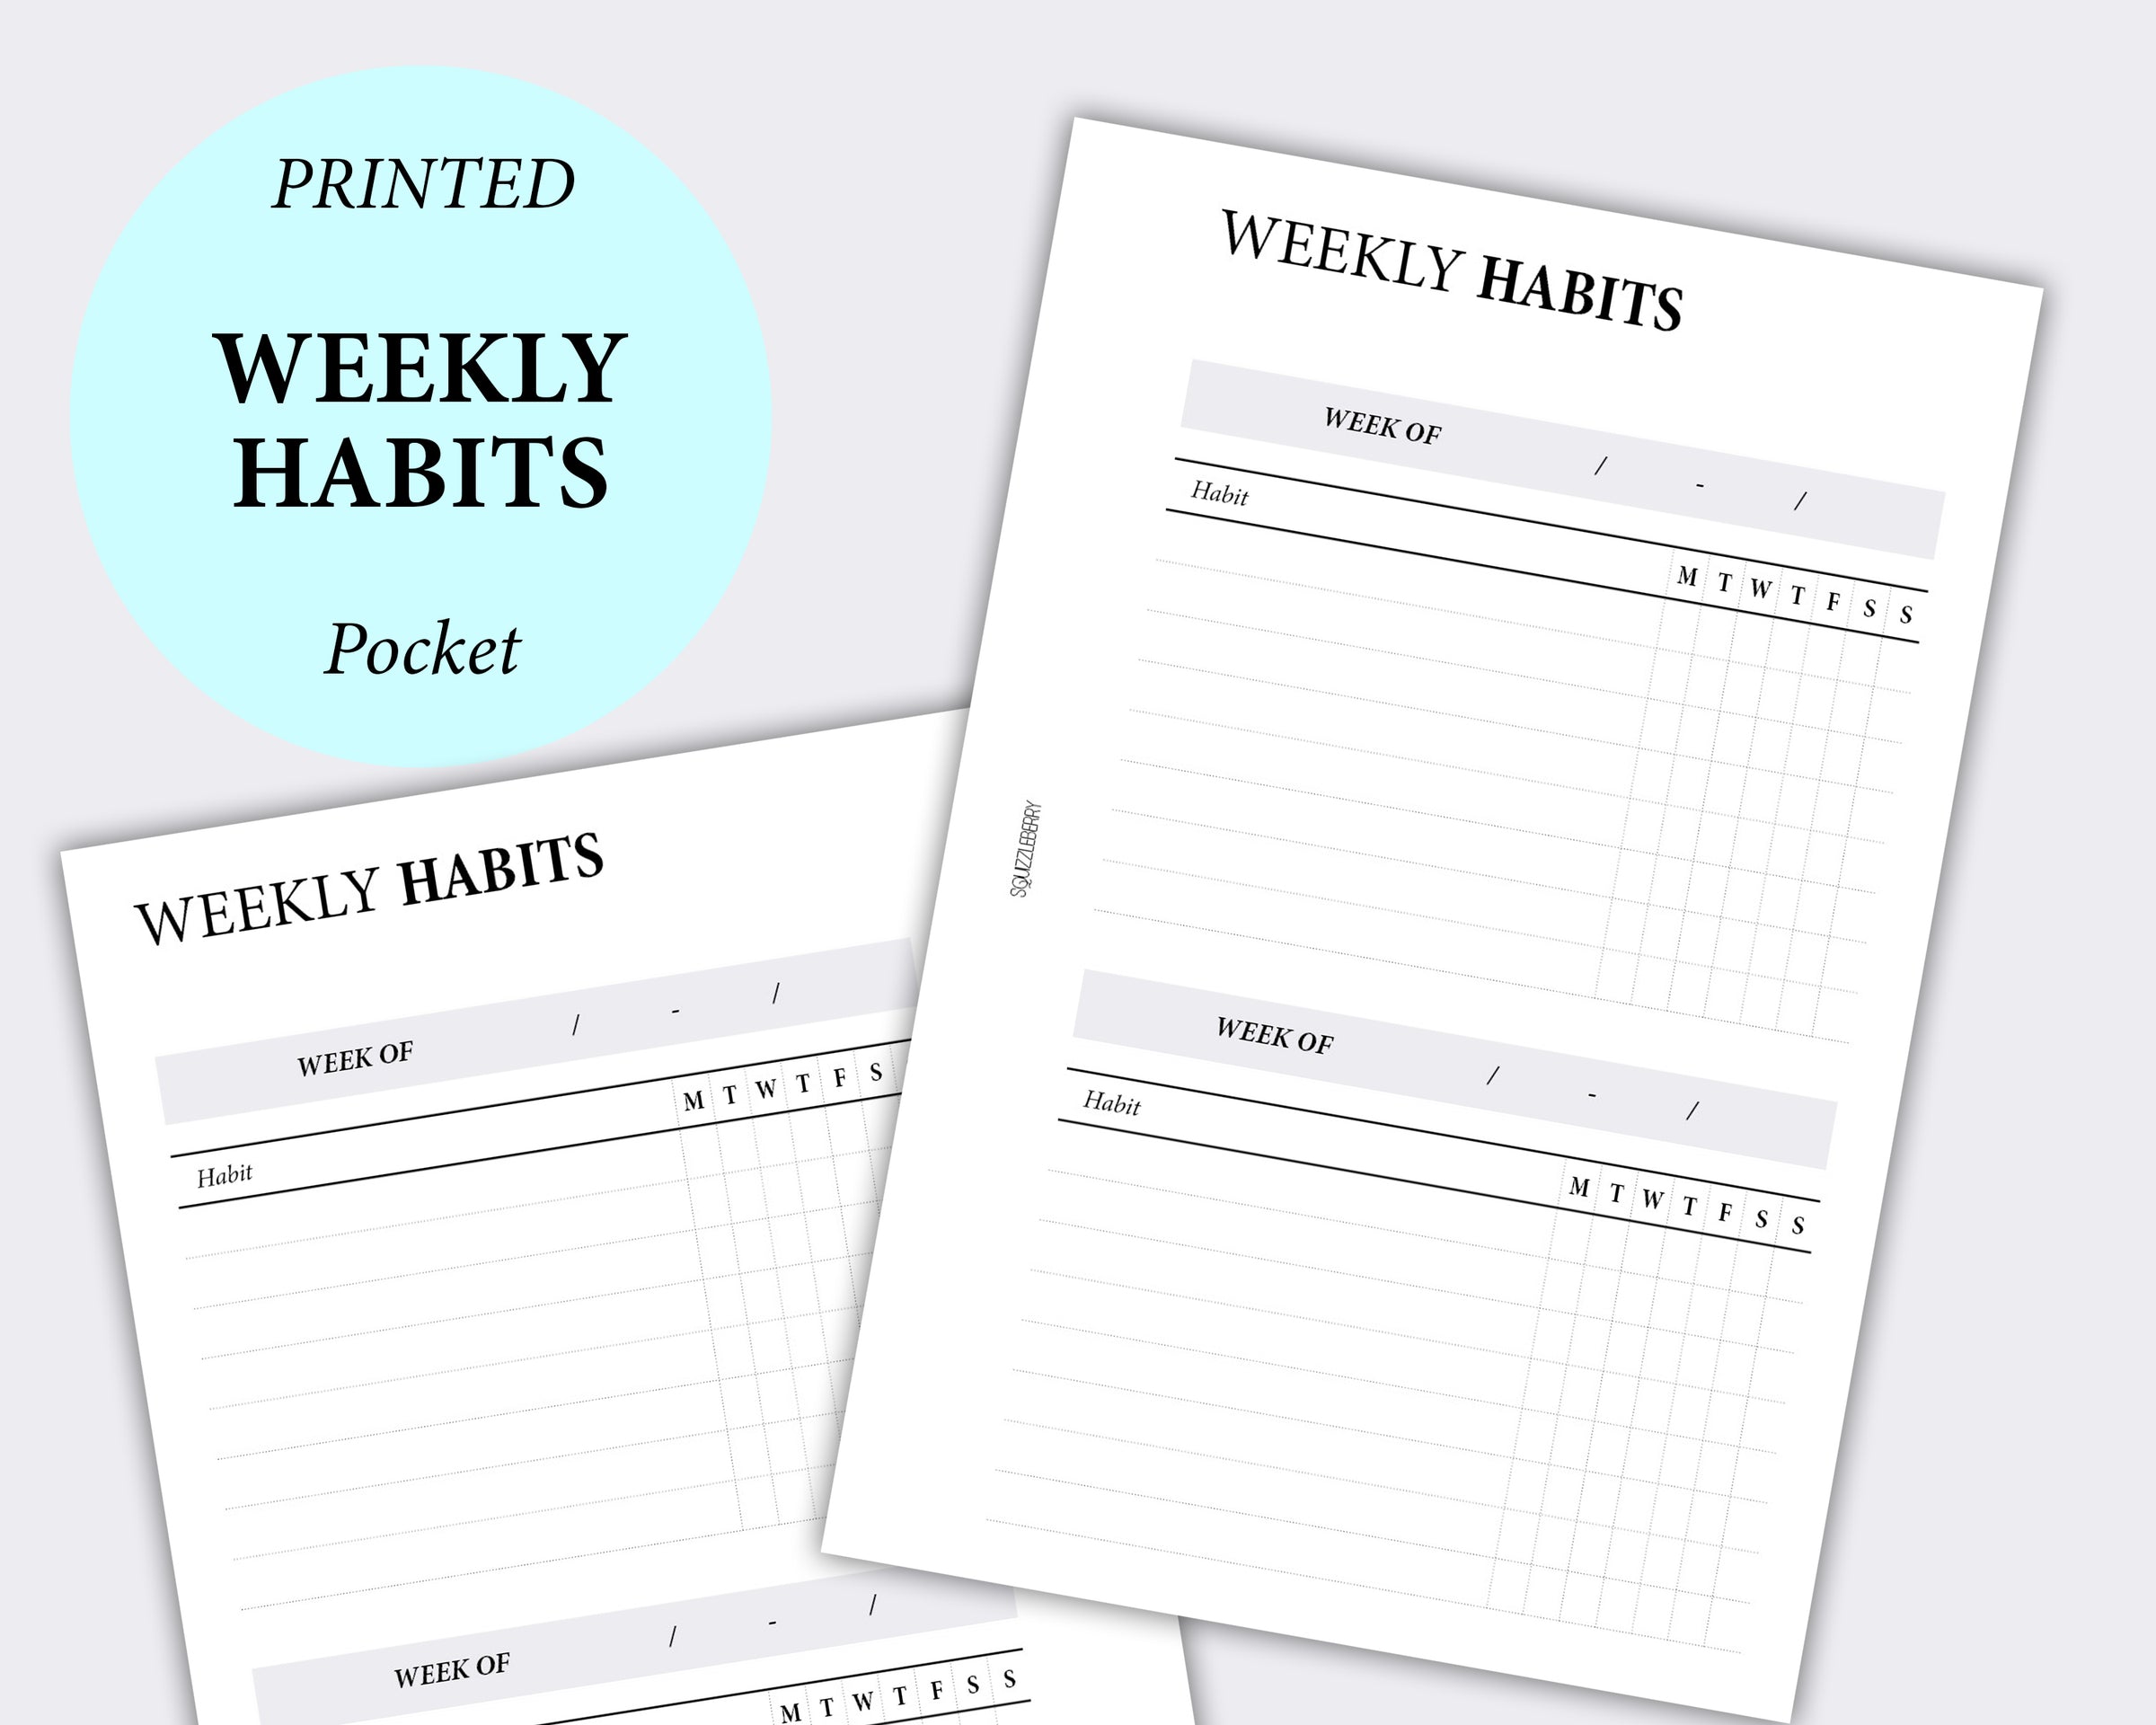 Weekly Habits - Pocket